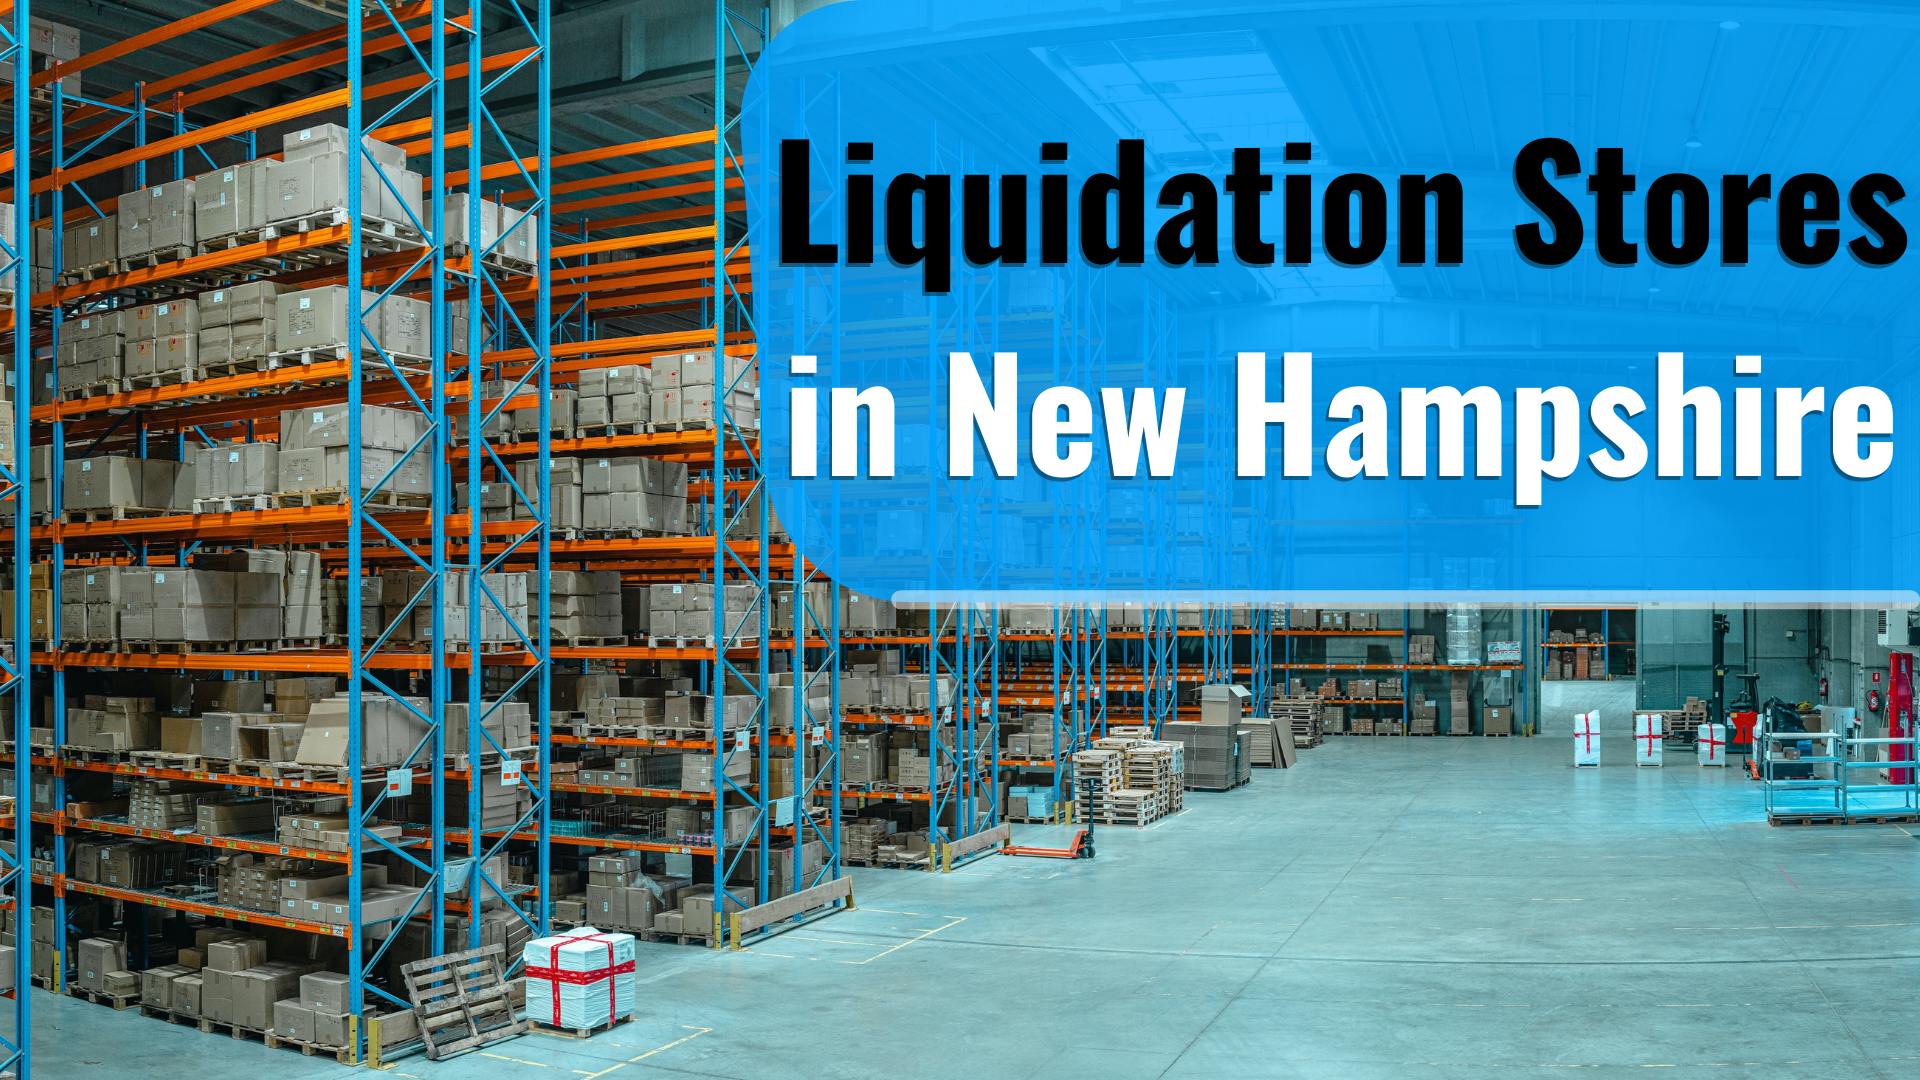 Liquidation Stores in New Hampshire